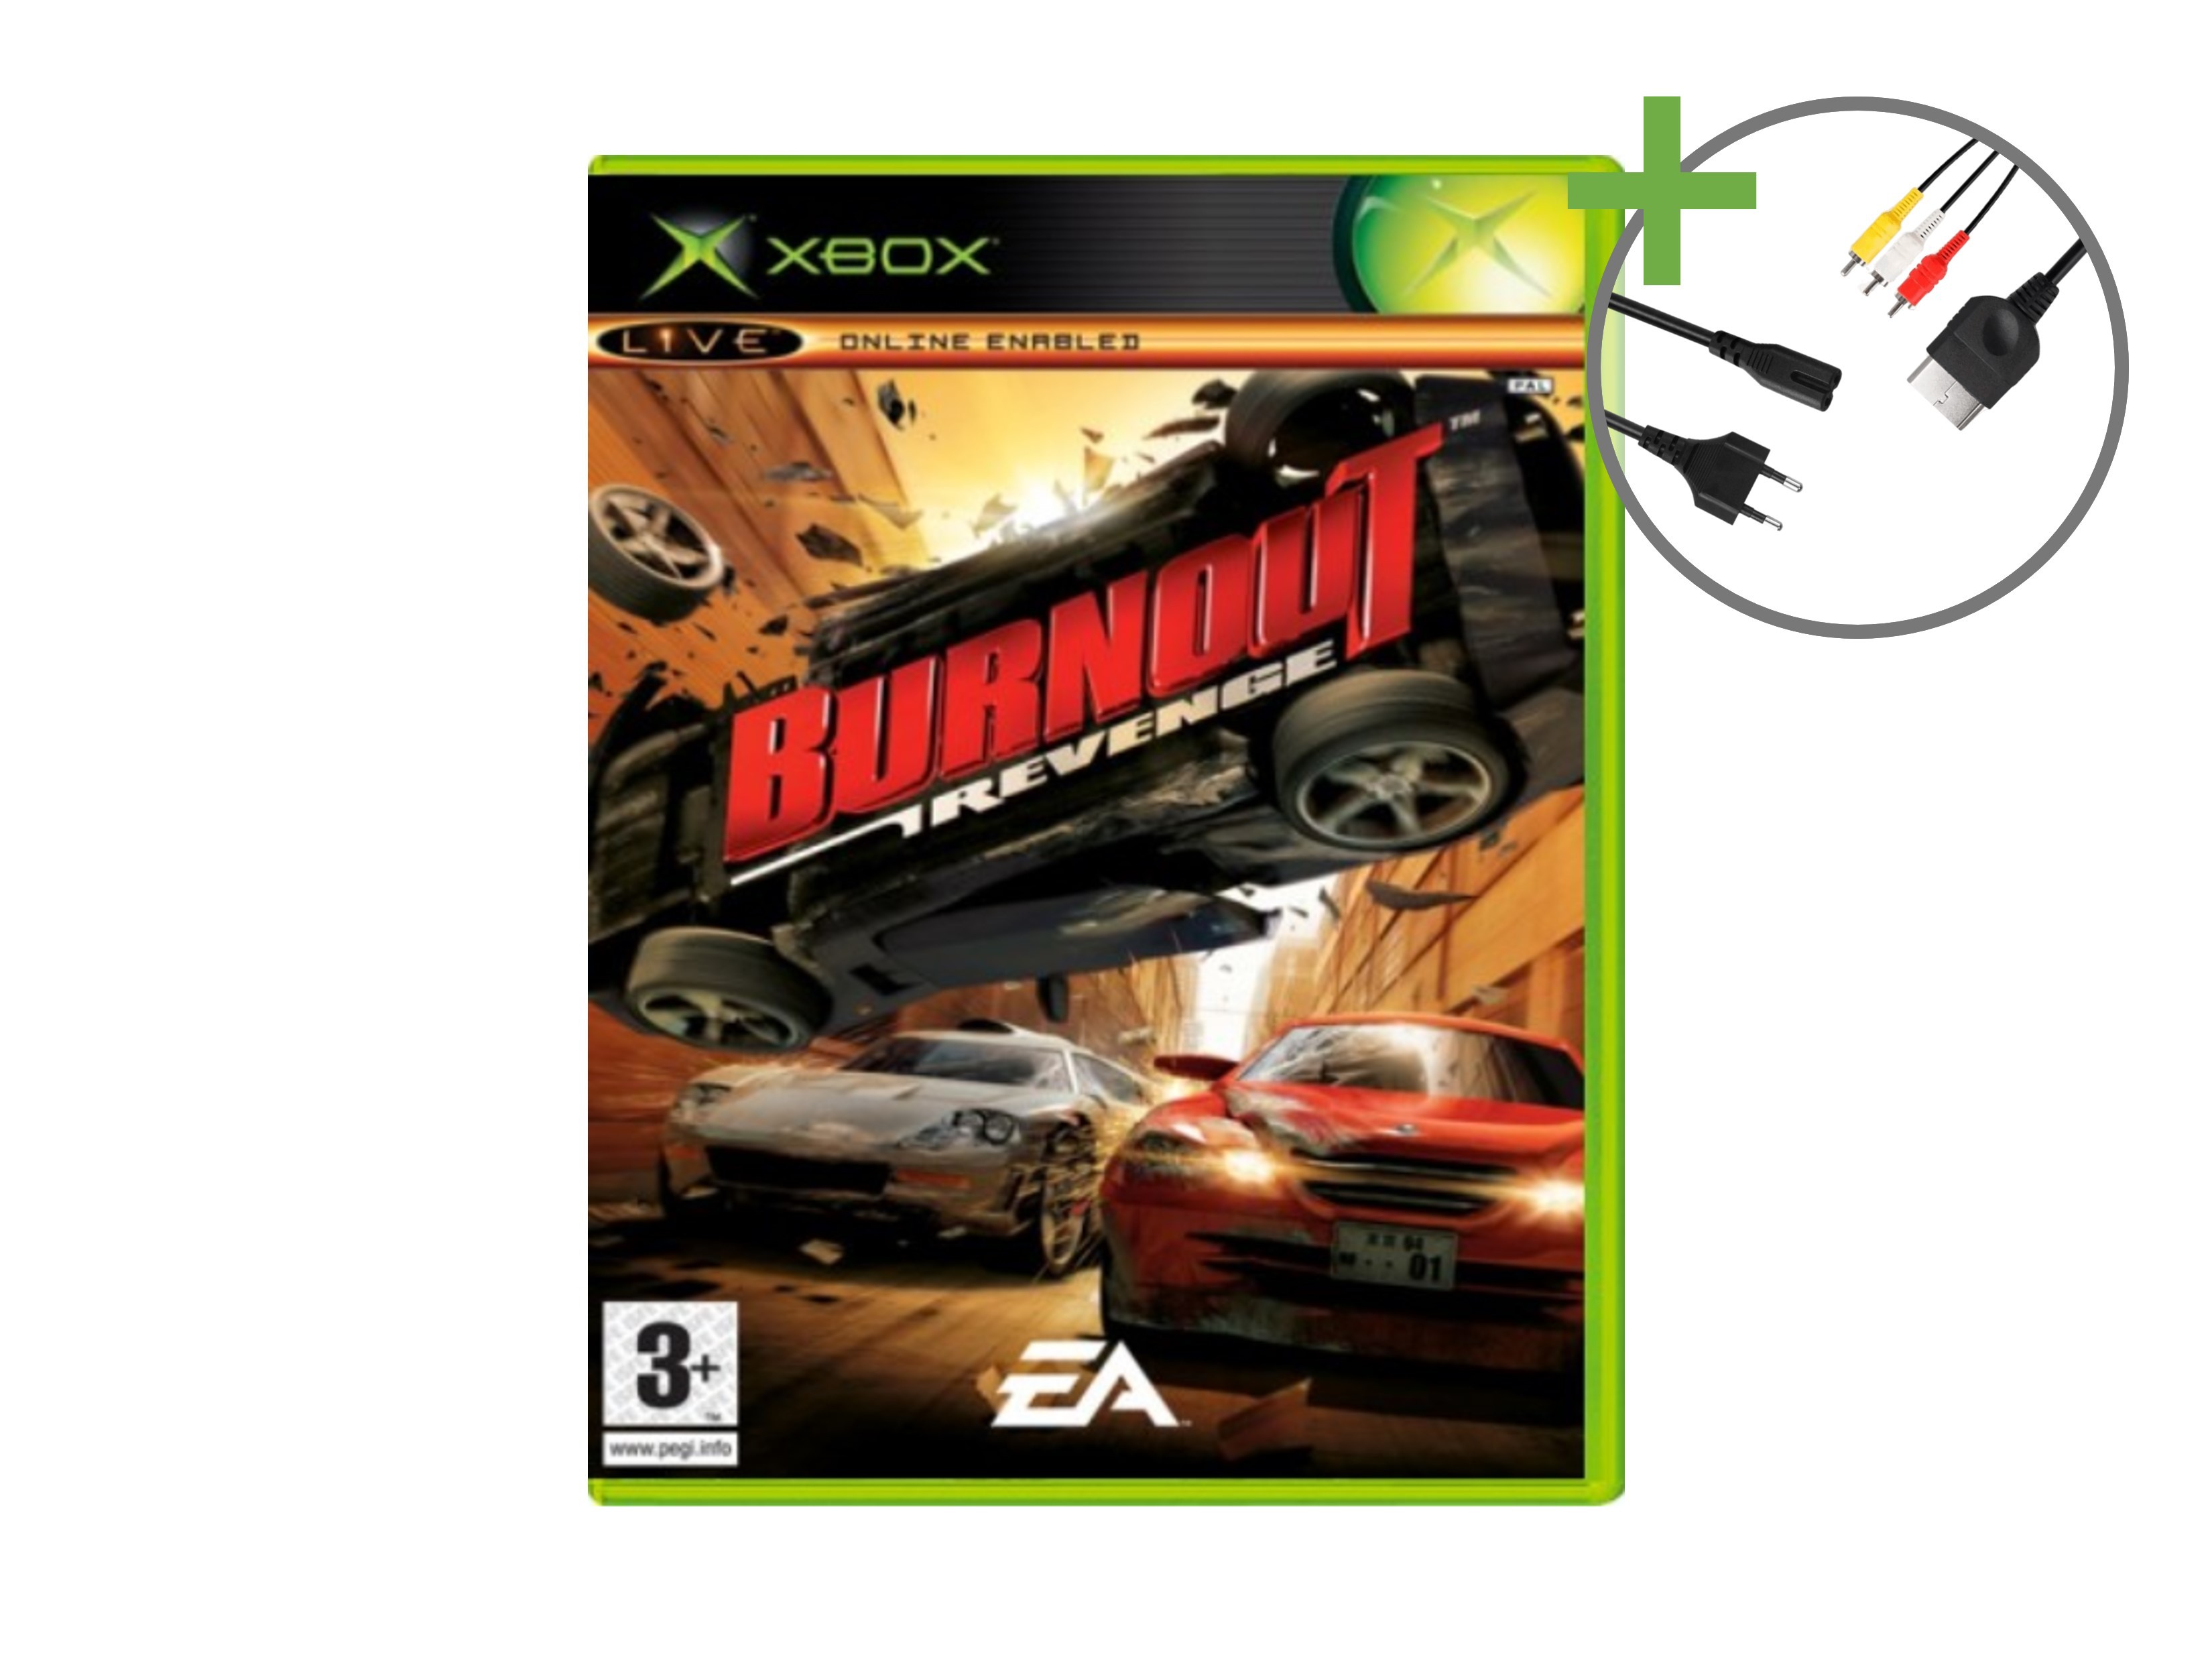 Microsoft Xbox Classic Starter Pack - Burnout 3 Edition - Xbox Original Hardware - 4